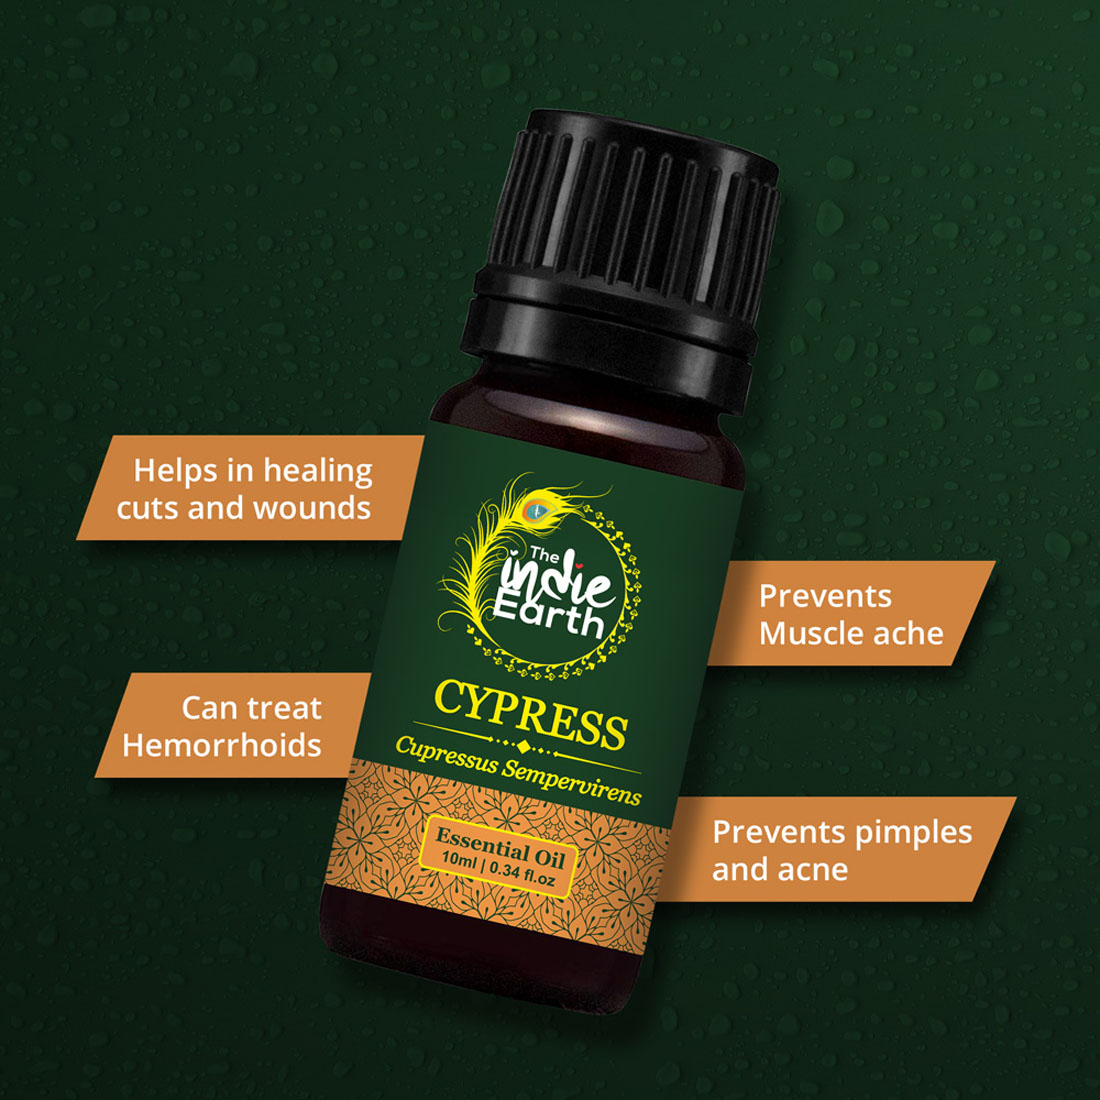 Cypress benefits